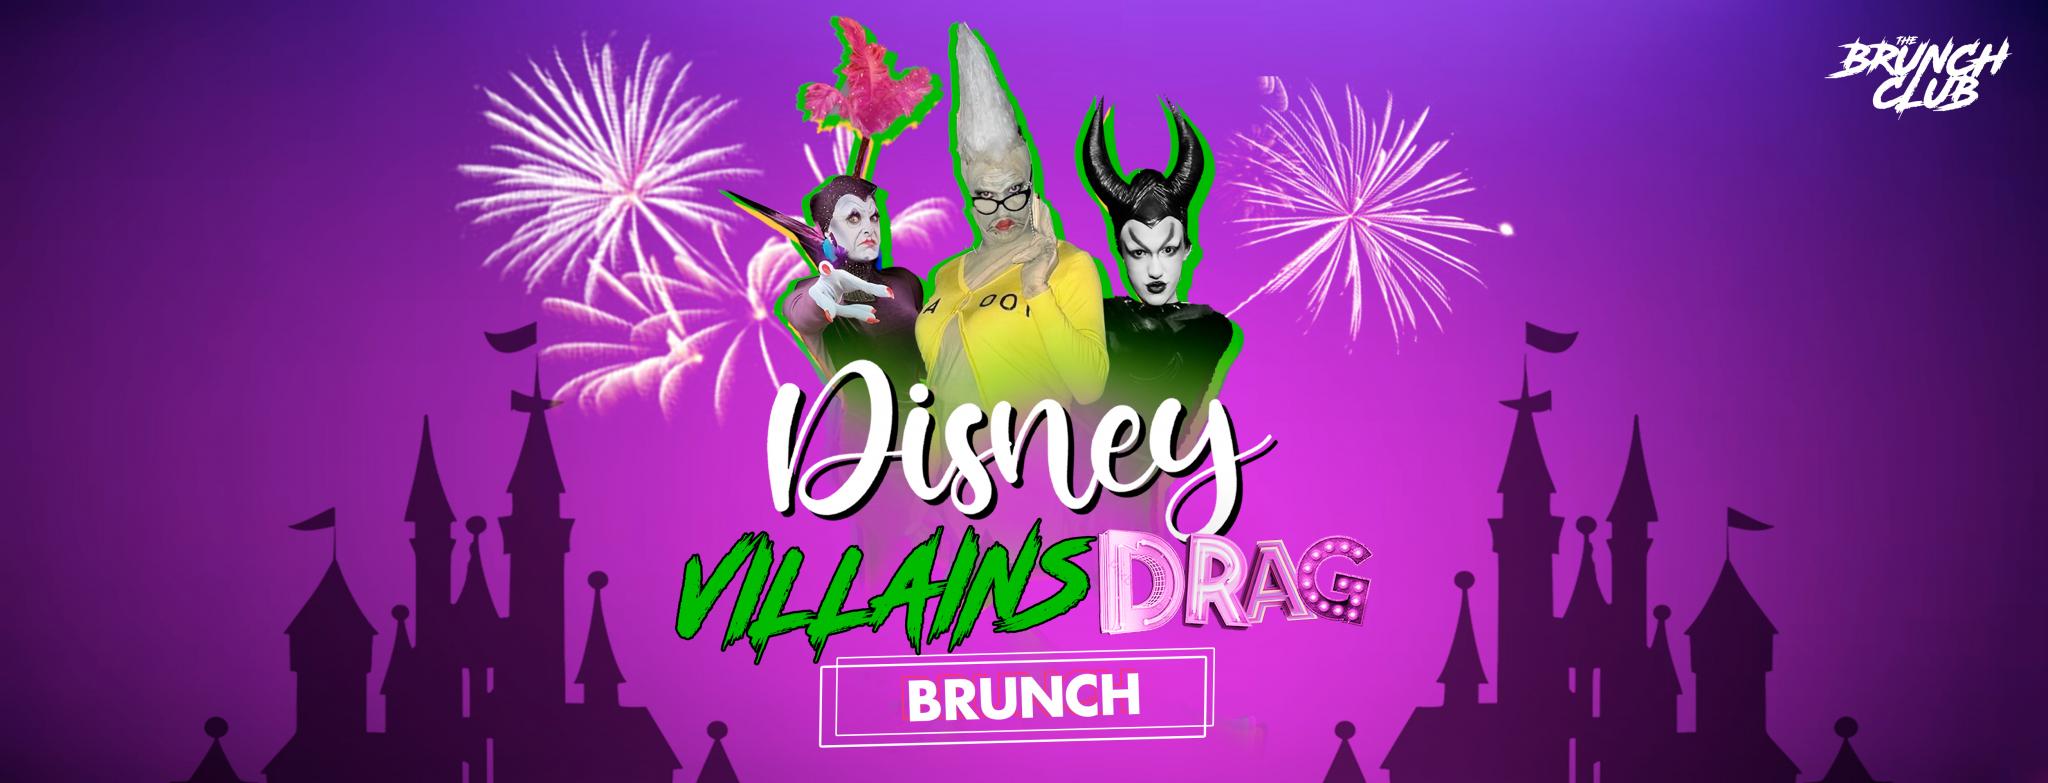 Disney Villains Drag Bottomless Brunch - Plymouth